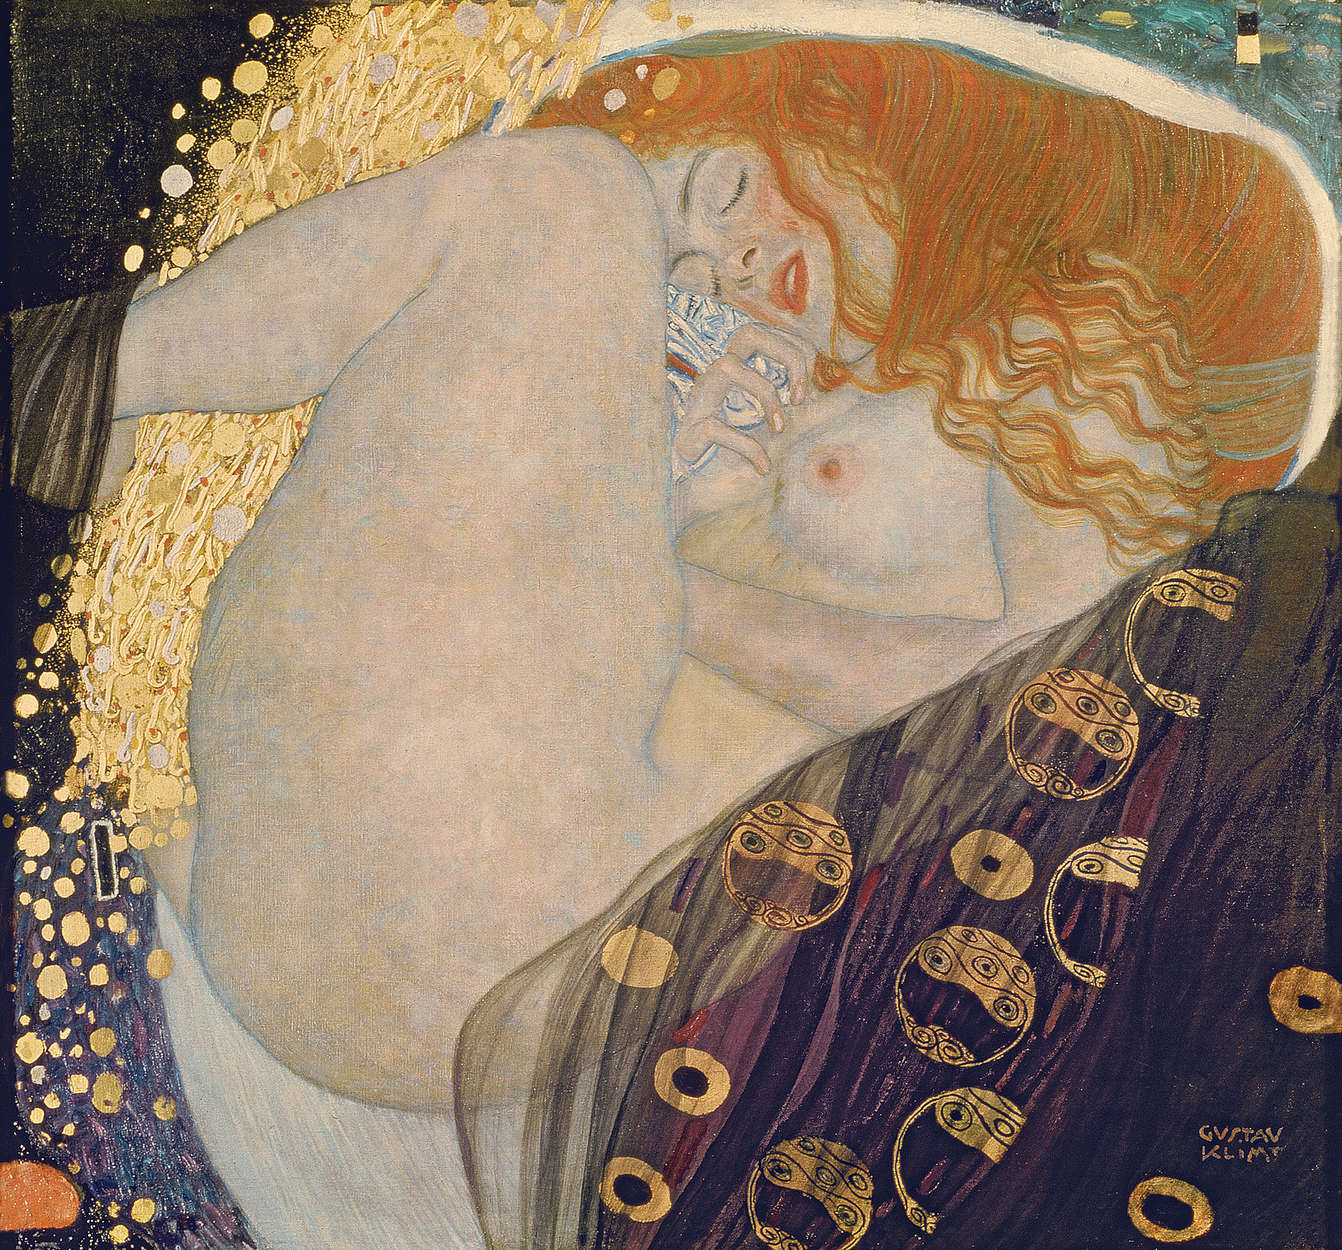             Fototapete "Danae" von Gustav Klimt
        